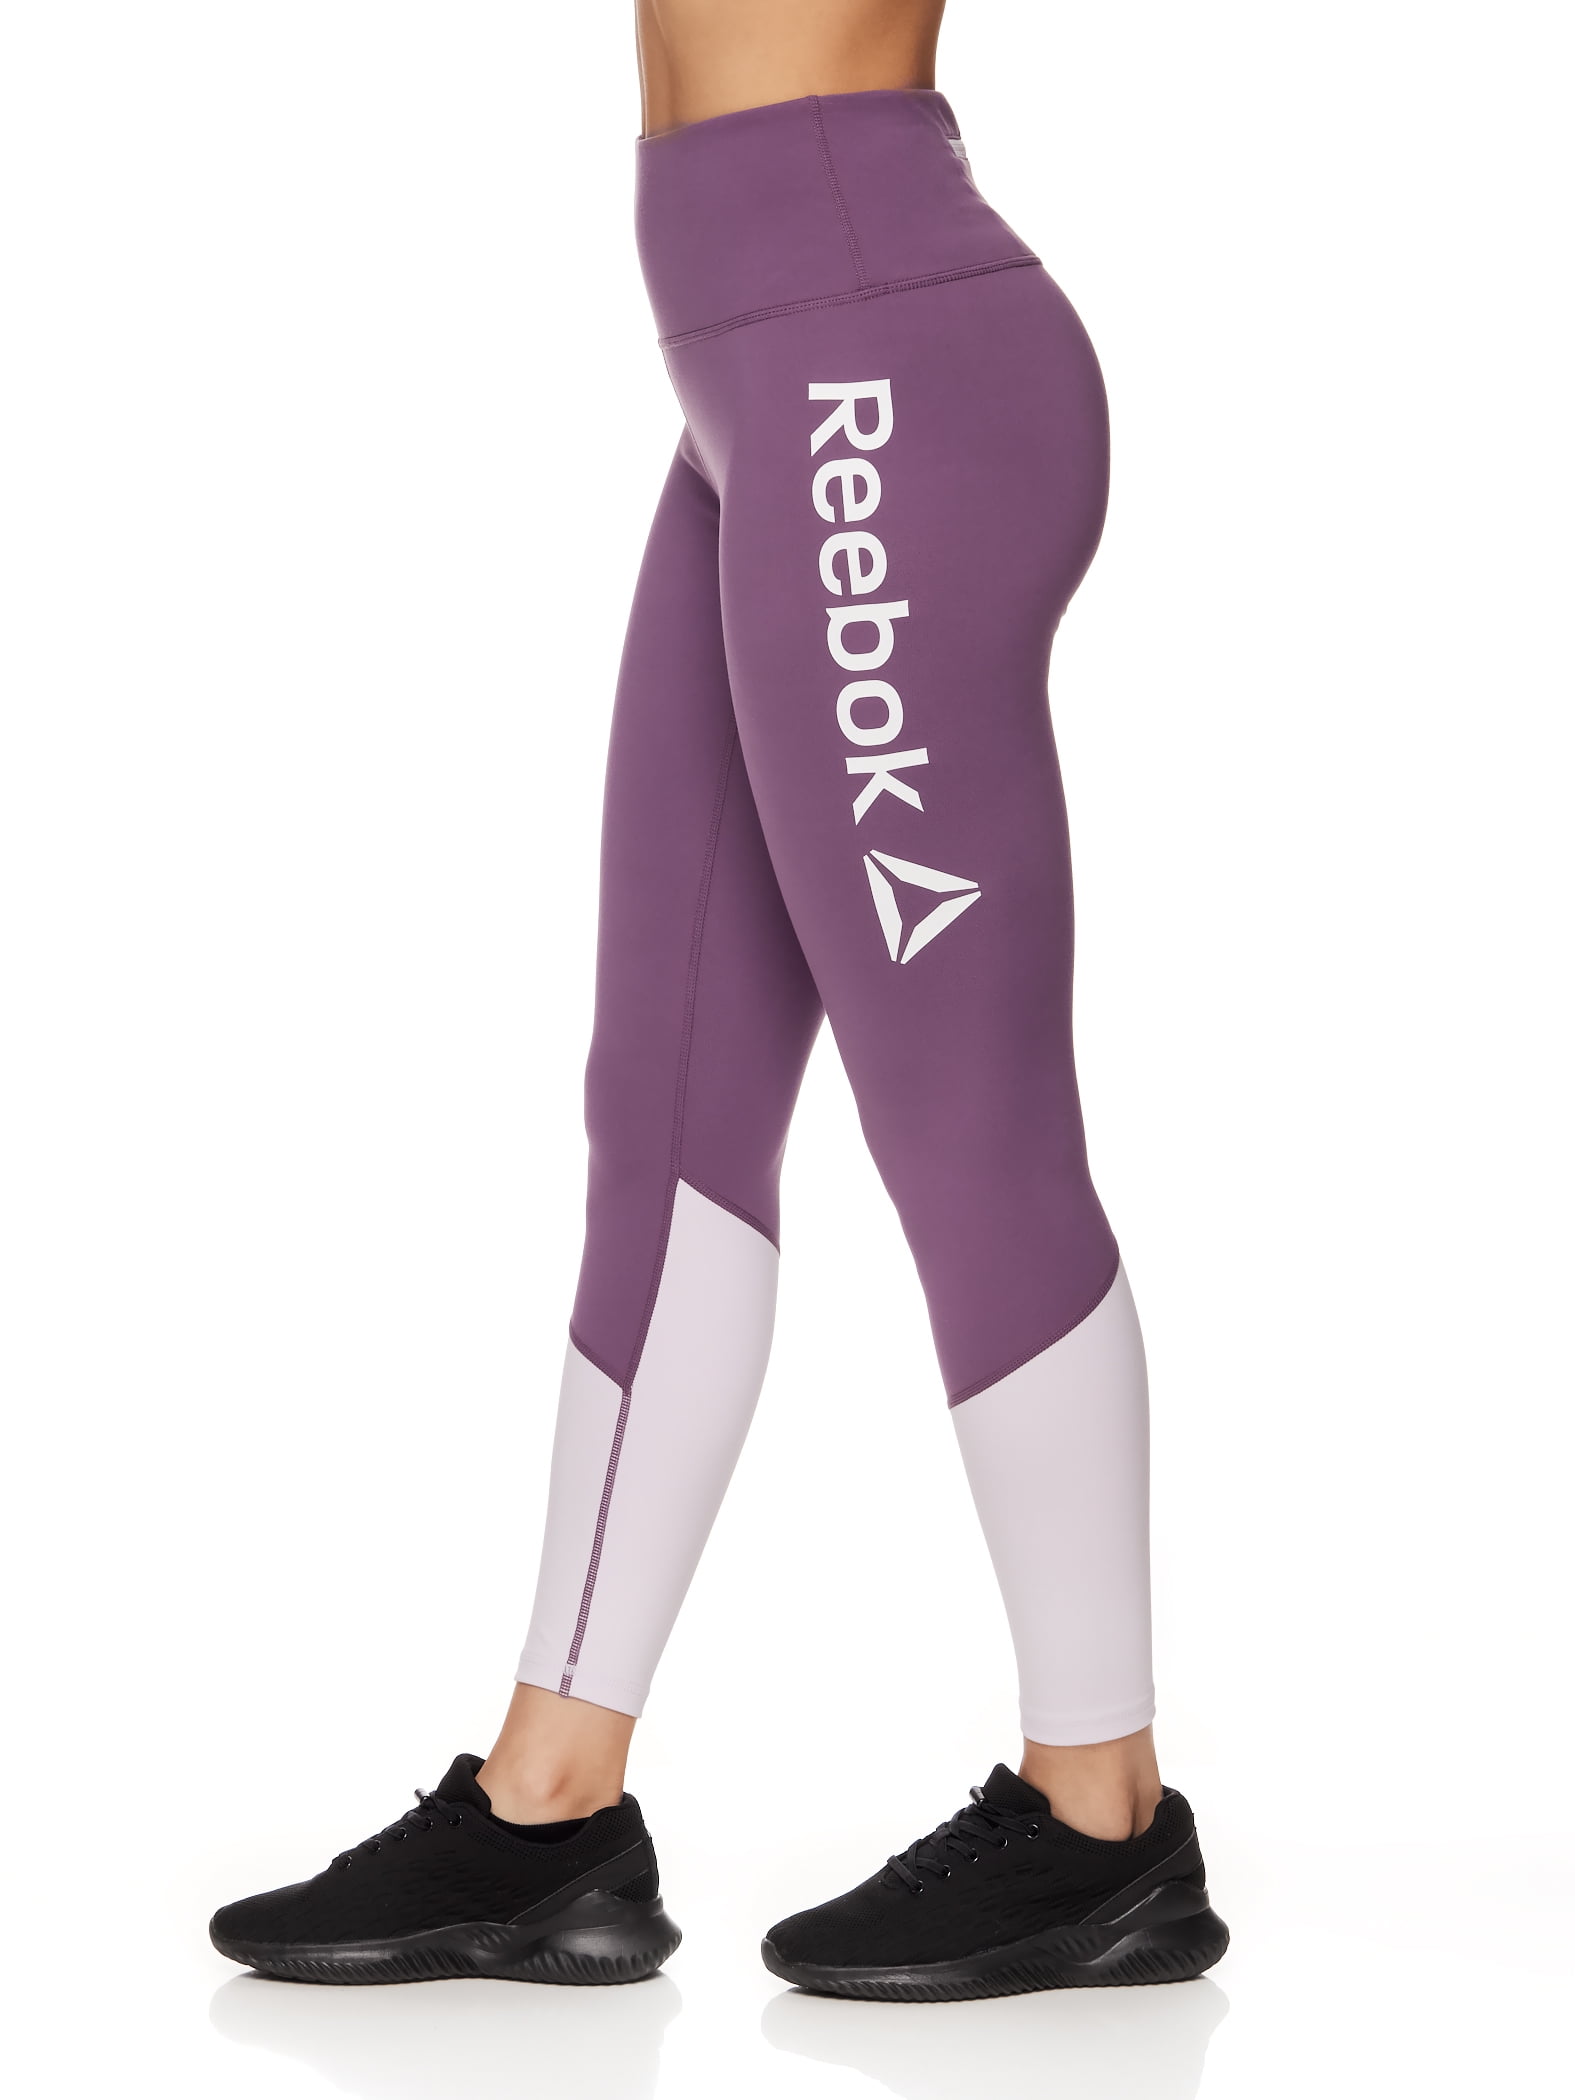 Reebok Women's Focus Highrise 7/8 Legging with 25" Inseam and Back Zipper Pocket